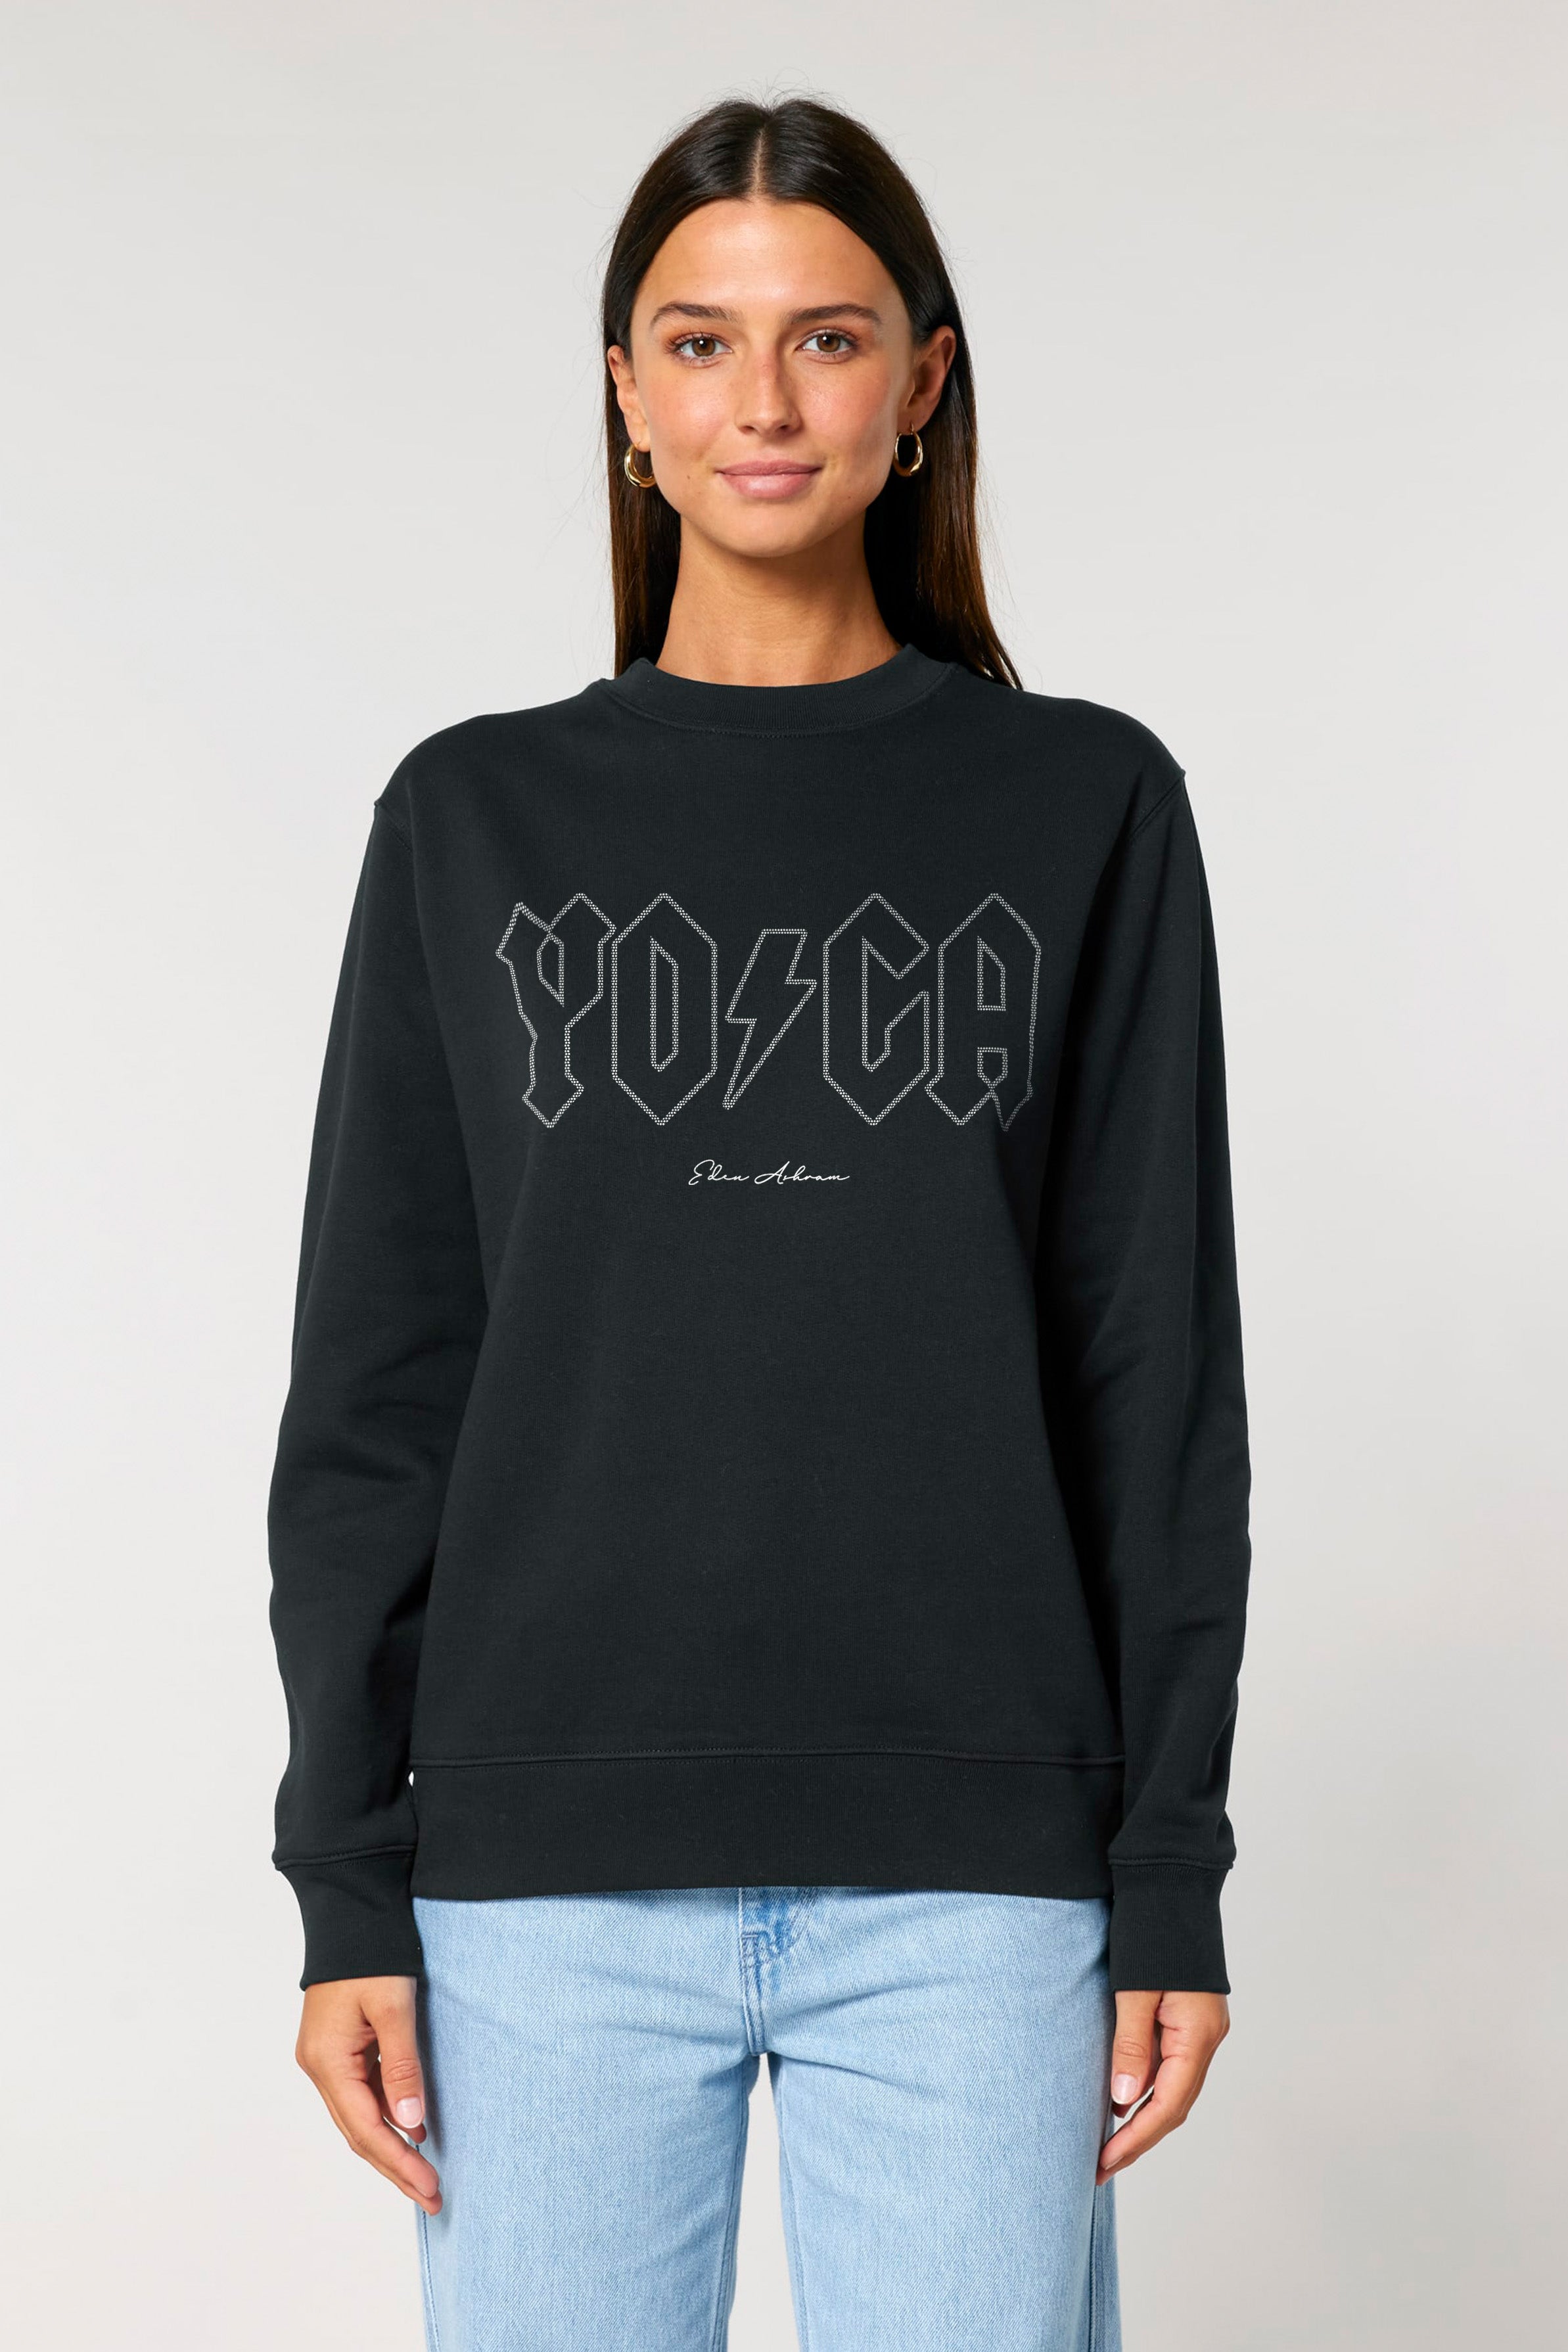 Eden Ashram Yoga Tour Ultimate Organic Sweatshirt